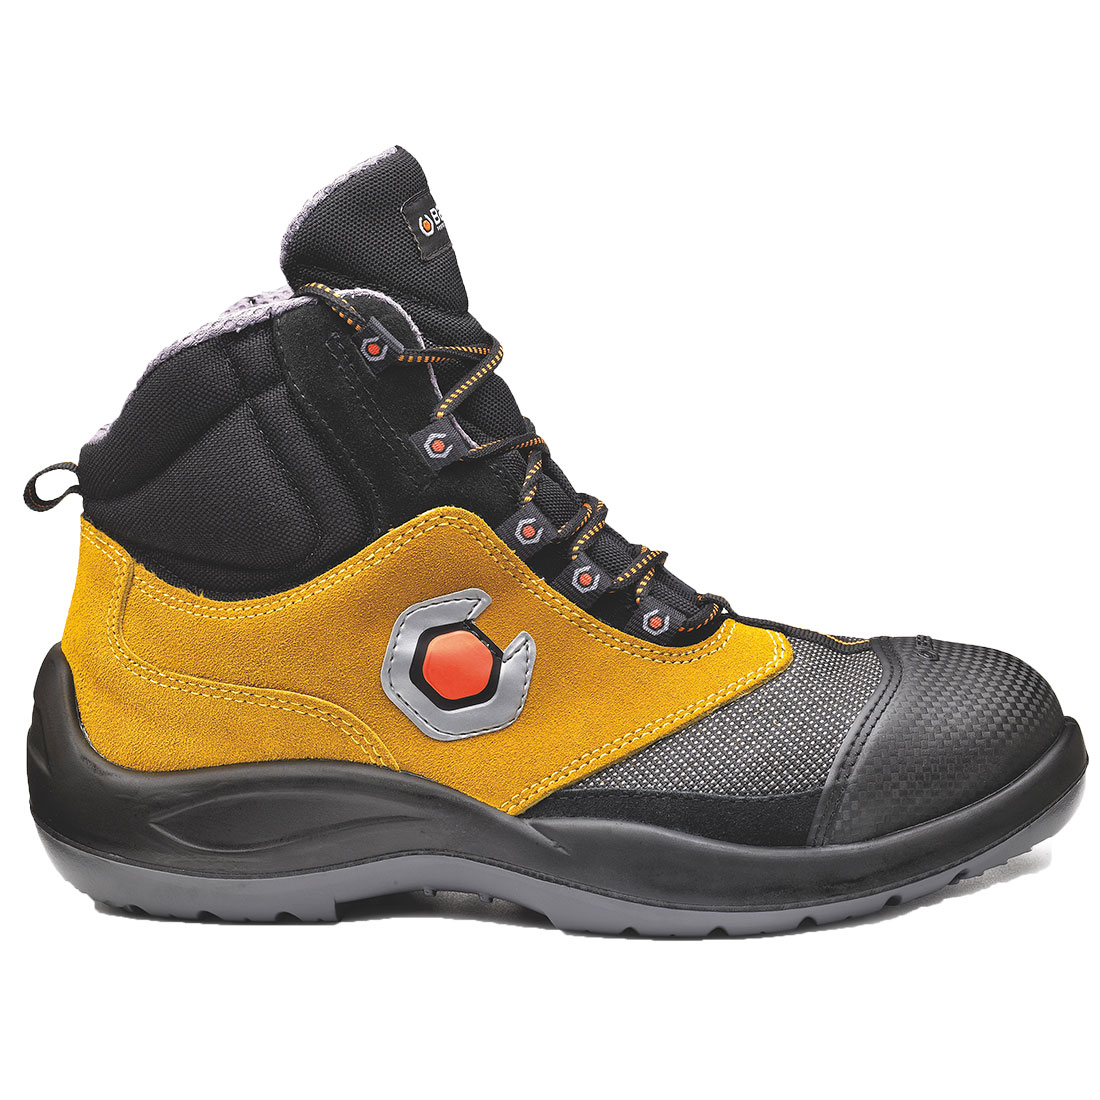 Base Extraflex Ankle Shoes Black/Yellow B0461